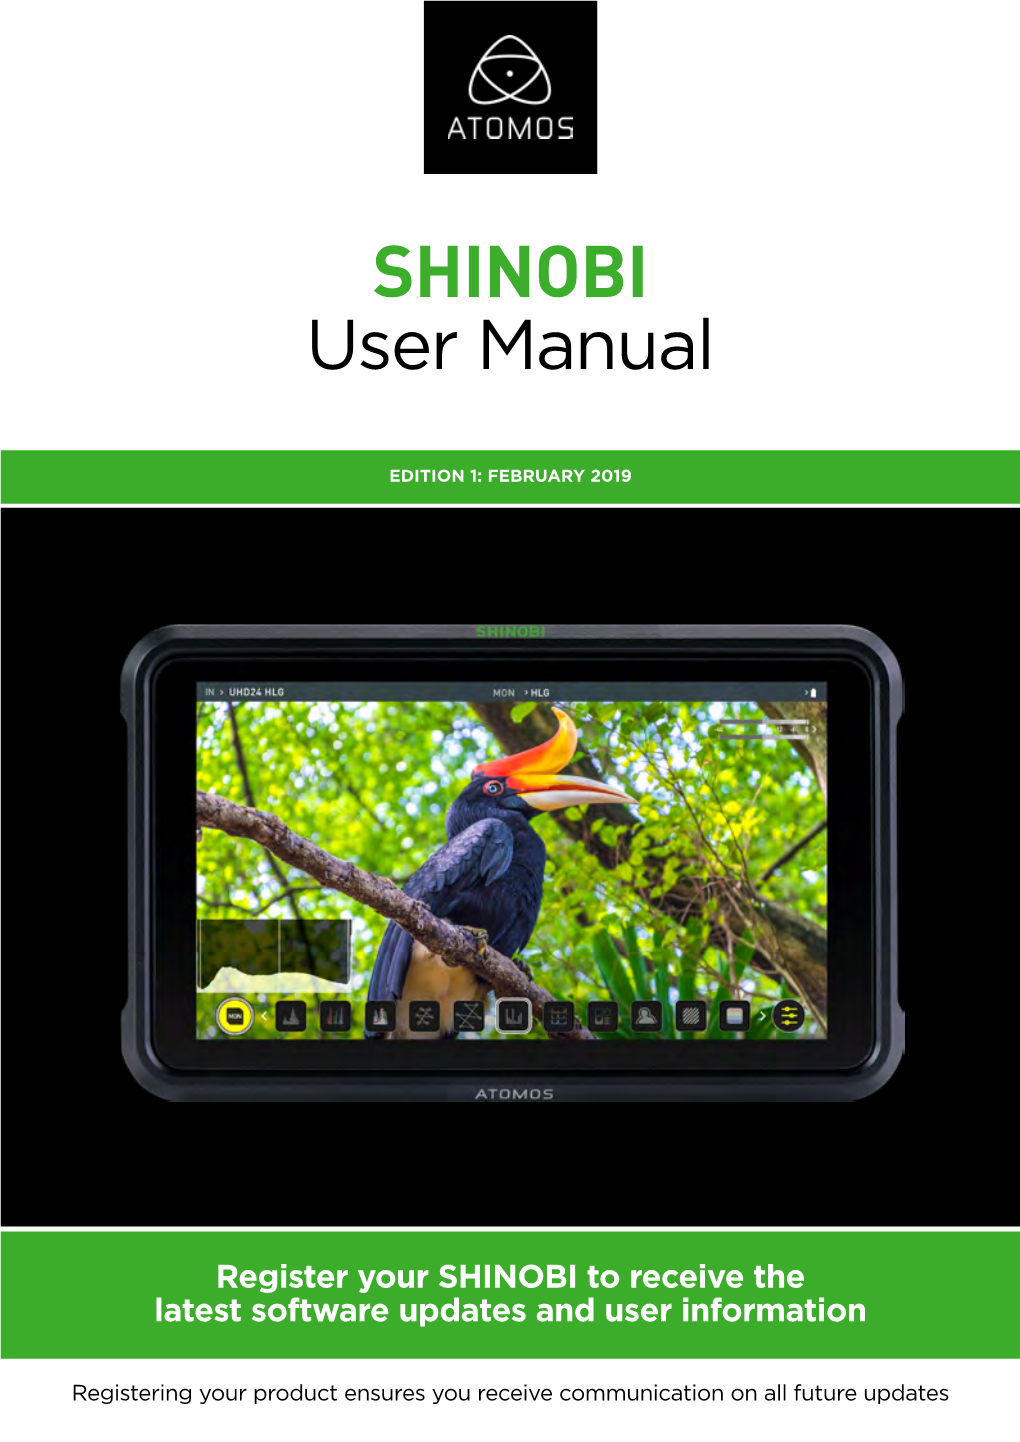 SHINOBI User Manual